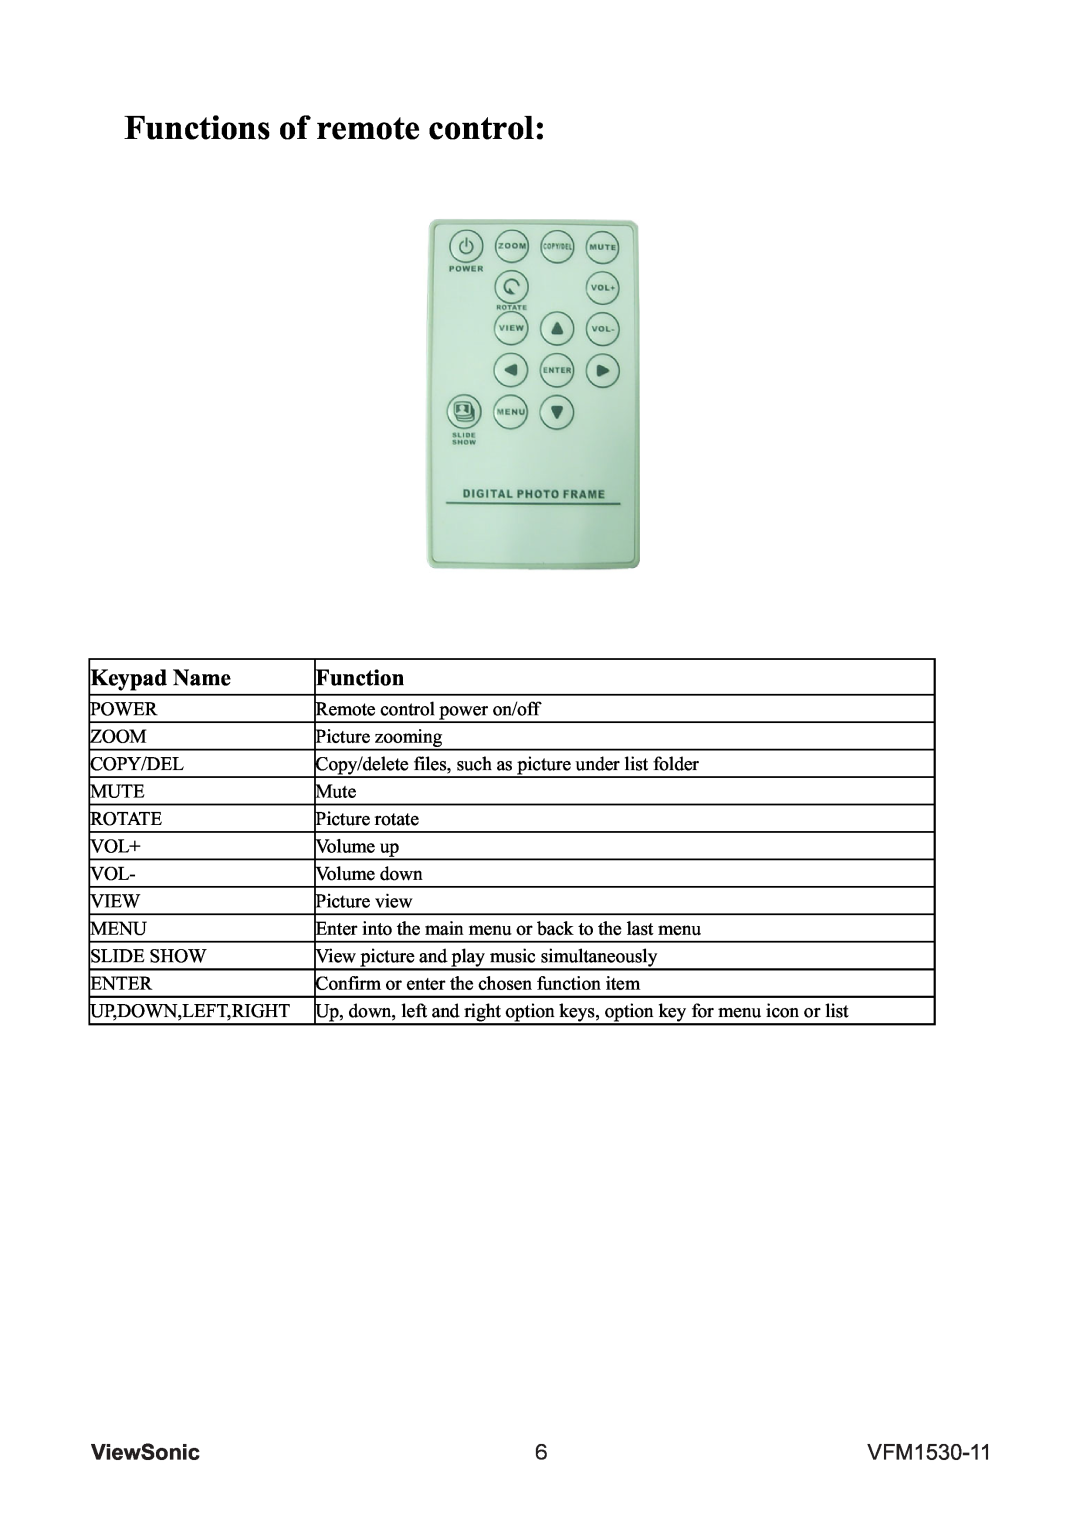 ViewSonic VFM1530-11 warranty Functions of remote control, Keypad Name, ViewSonic 